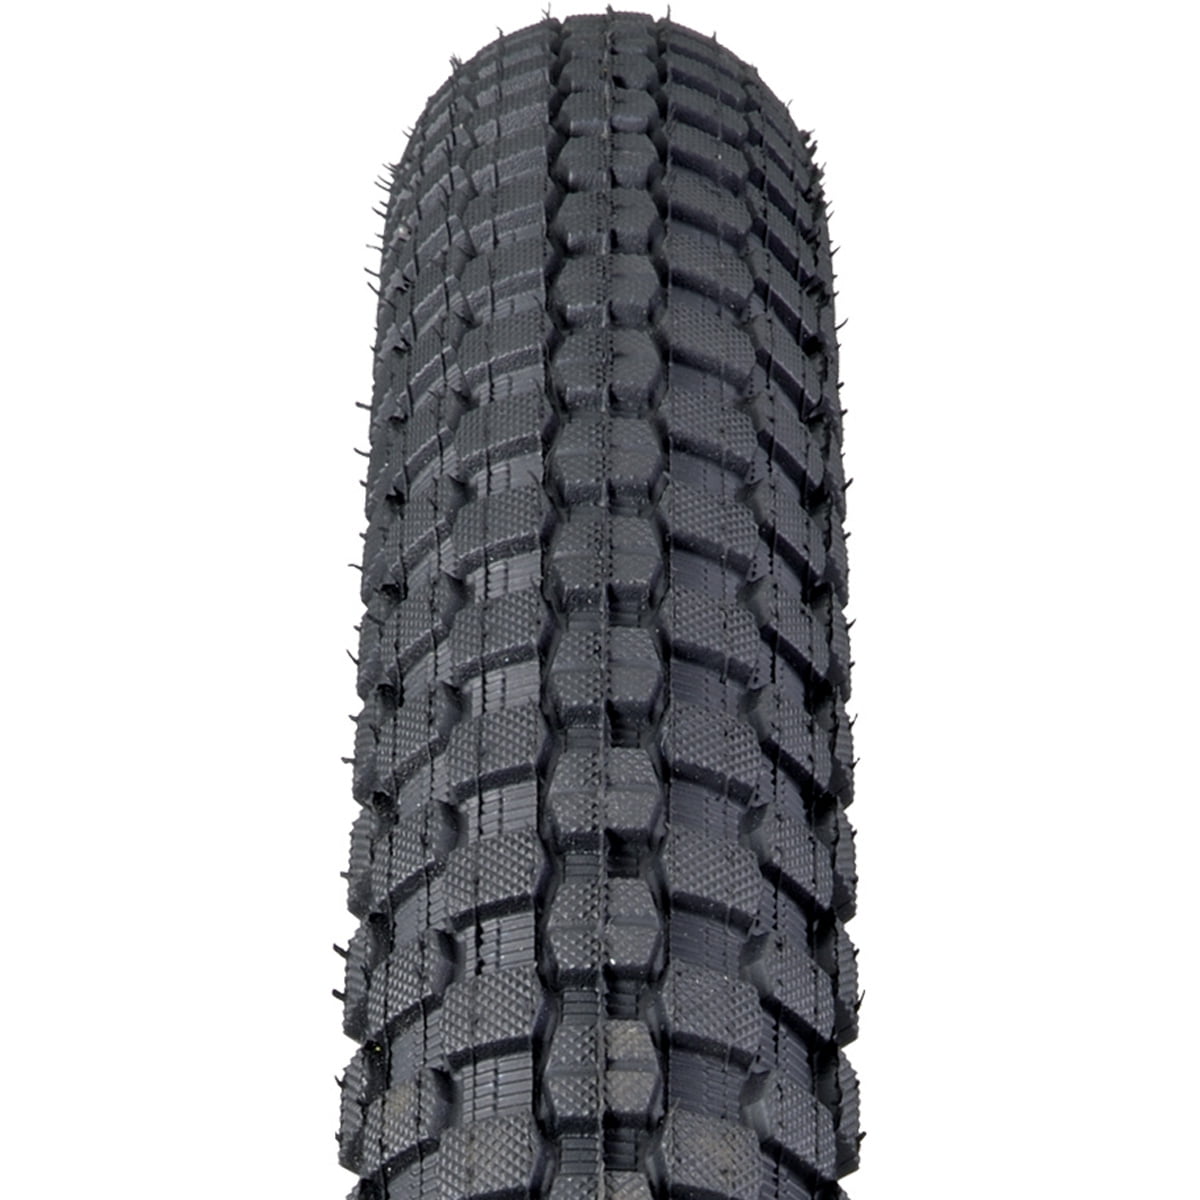 BIKE ORIGINAL Mountain Bike Tyre 26 x 1.90 with a Low Carbon Steel Bead